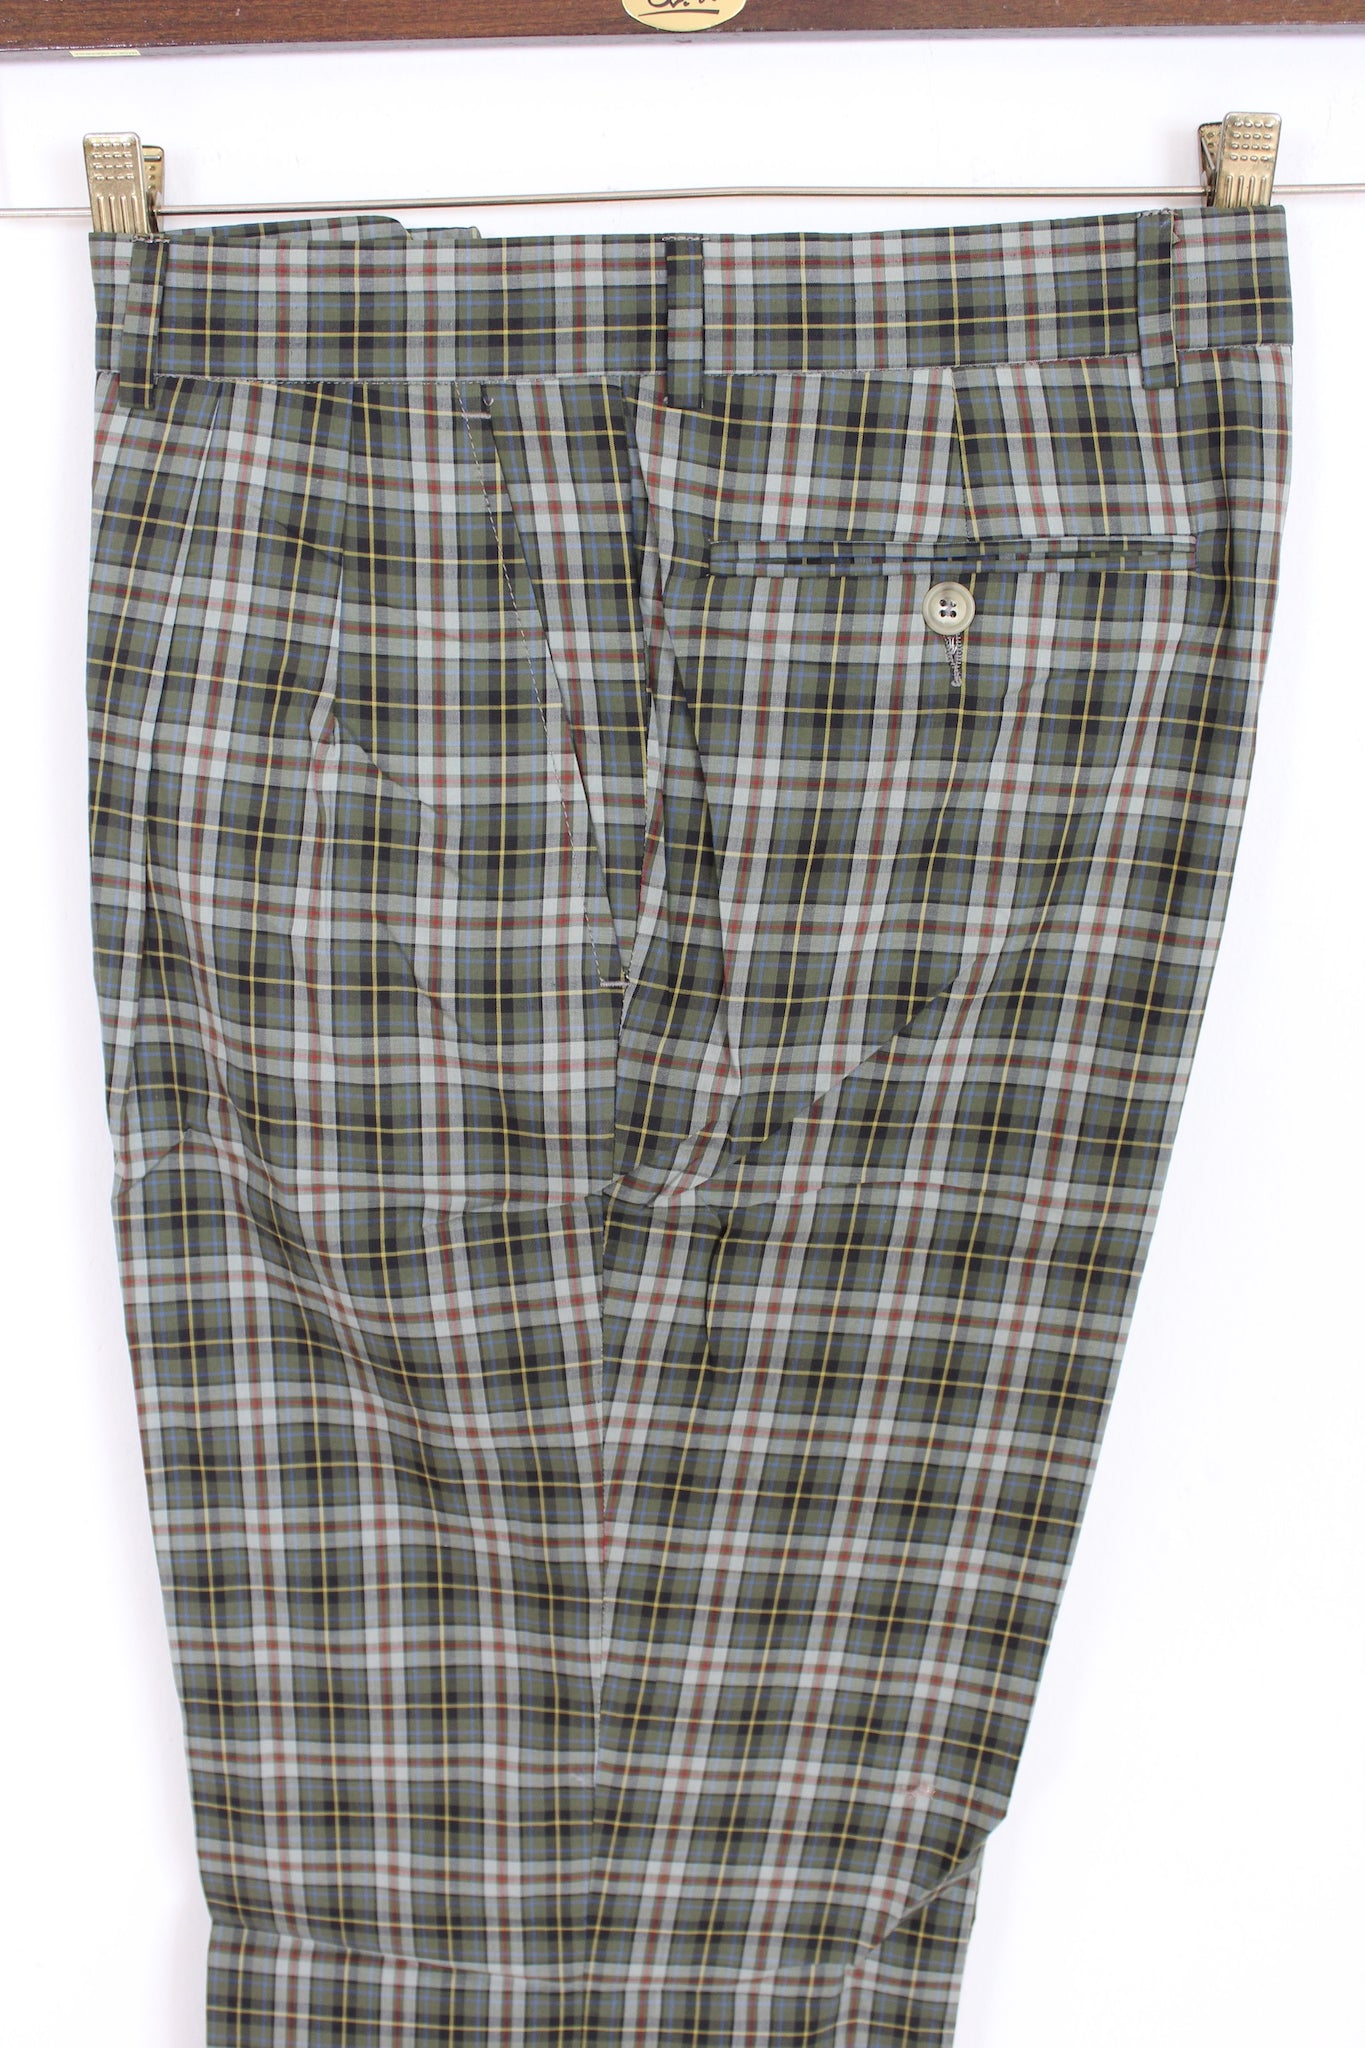 Faconnable Pantalone Cotone Verde Grigio Vintage Quadri Anni '90 Tg 42